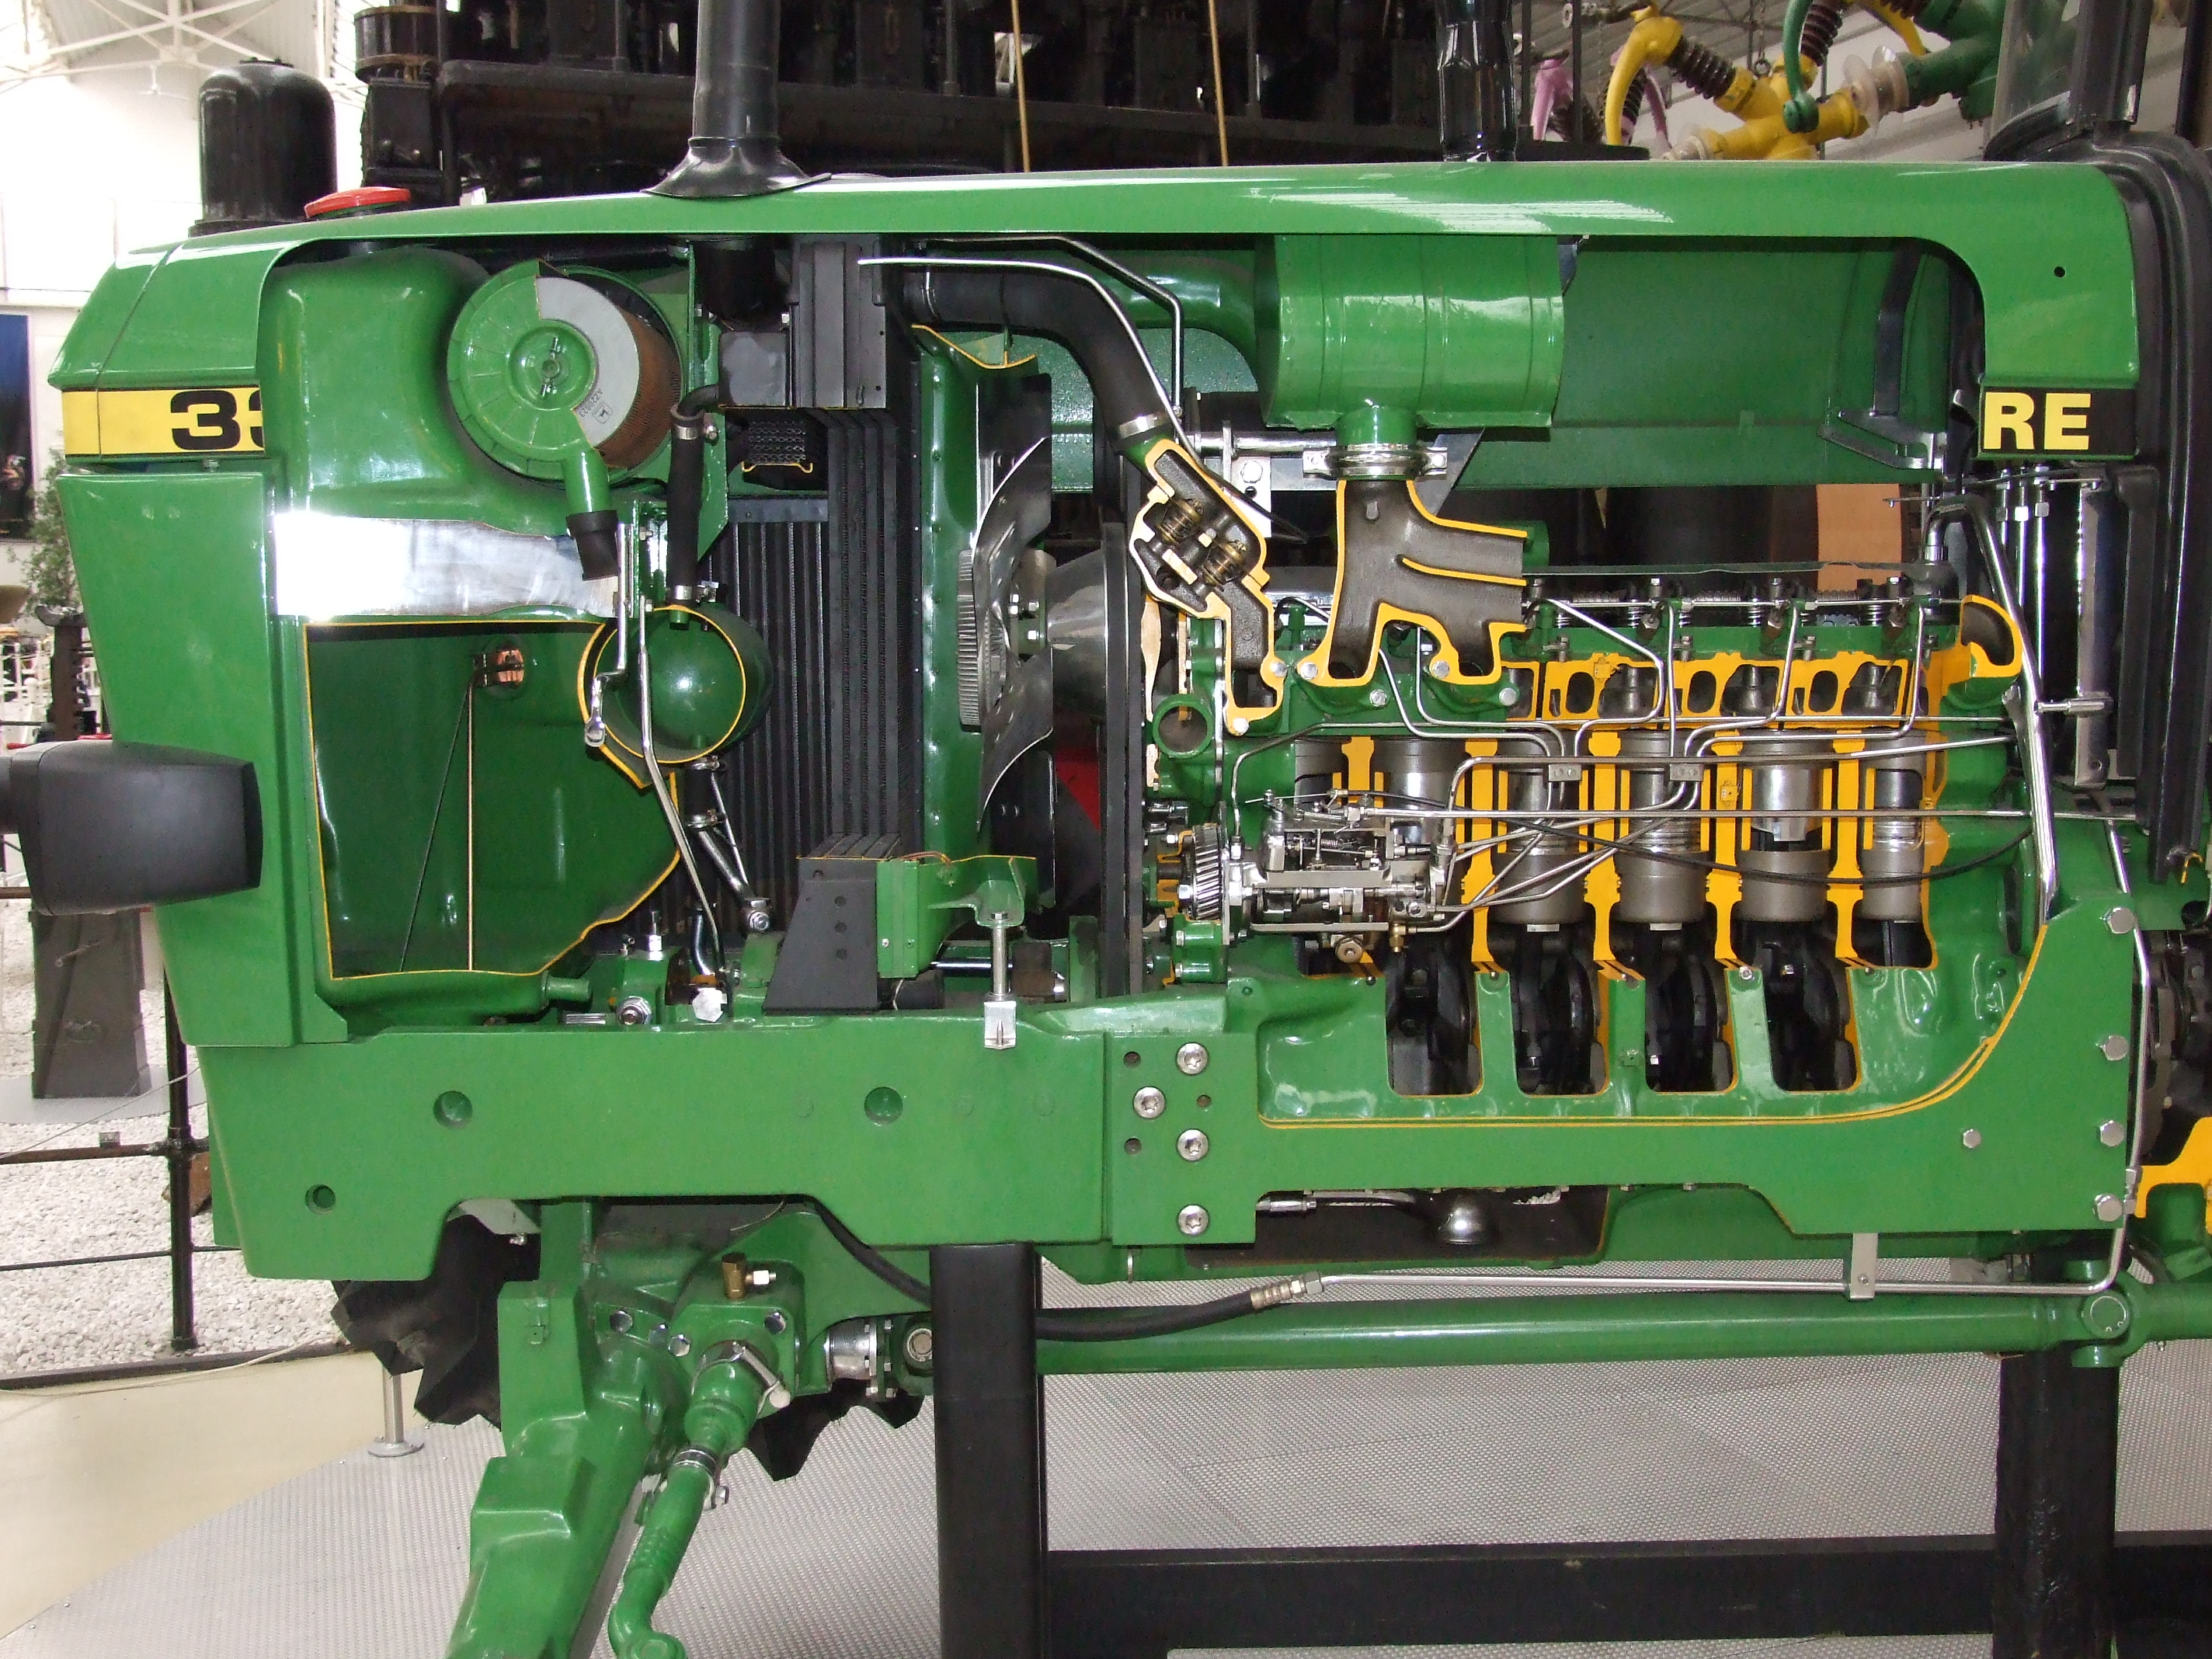 File:John Deere 3350 tractor cut engine.JPG